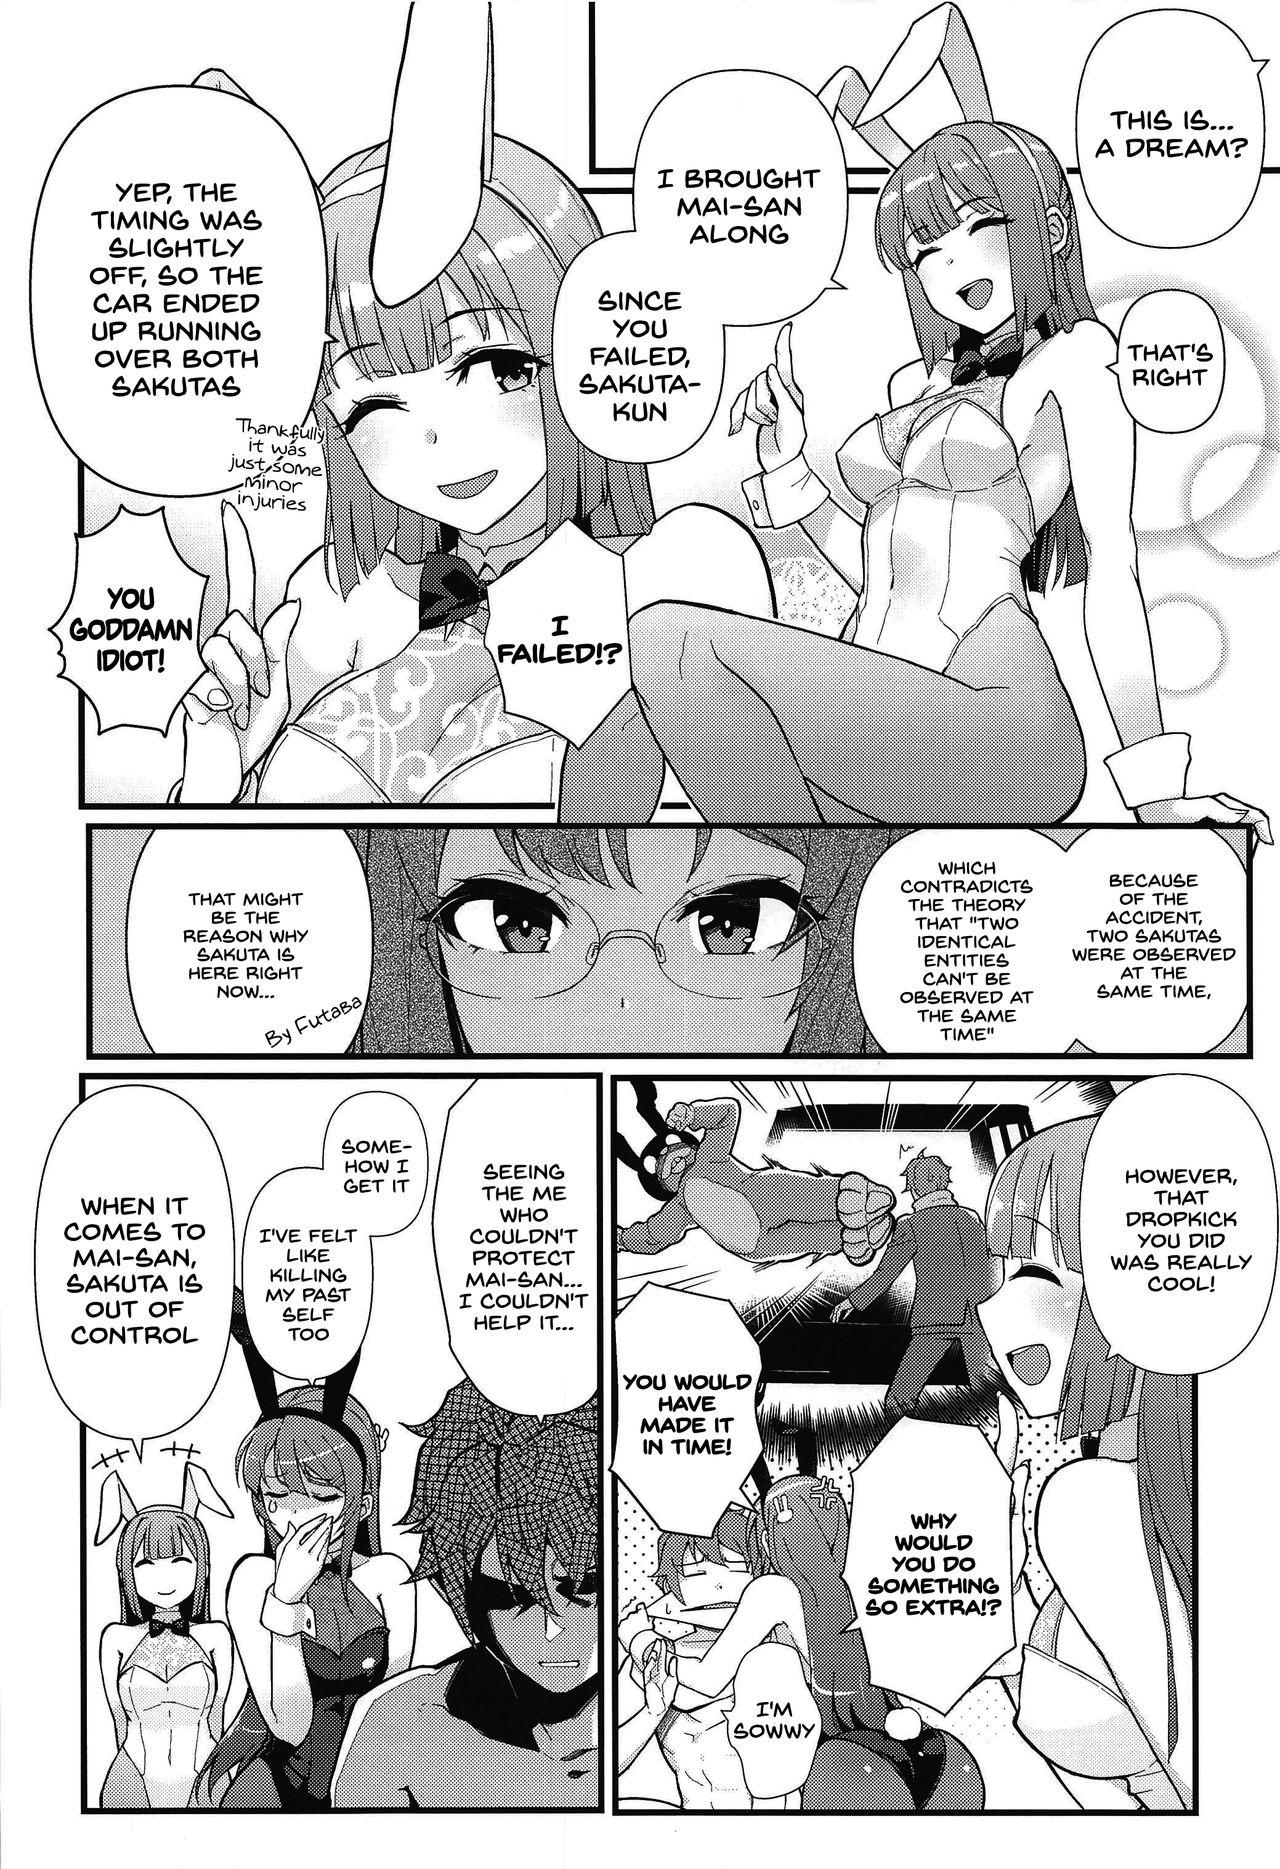 Hot Women Fucking Lucid Dream - Seishun buta yarou wa bunny girl senpai no yume o minai Blackwoman - Page 5